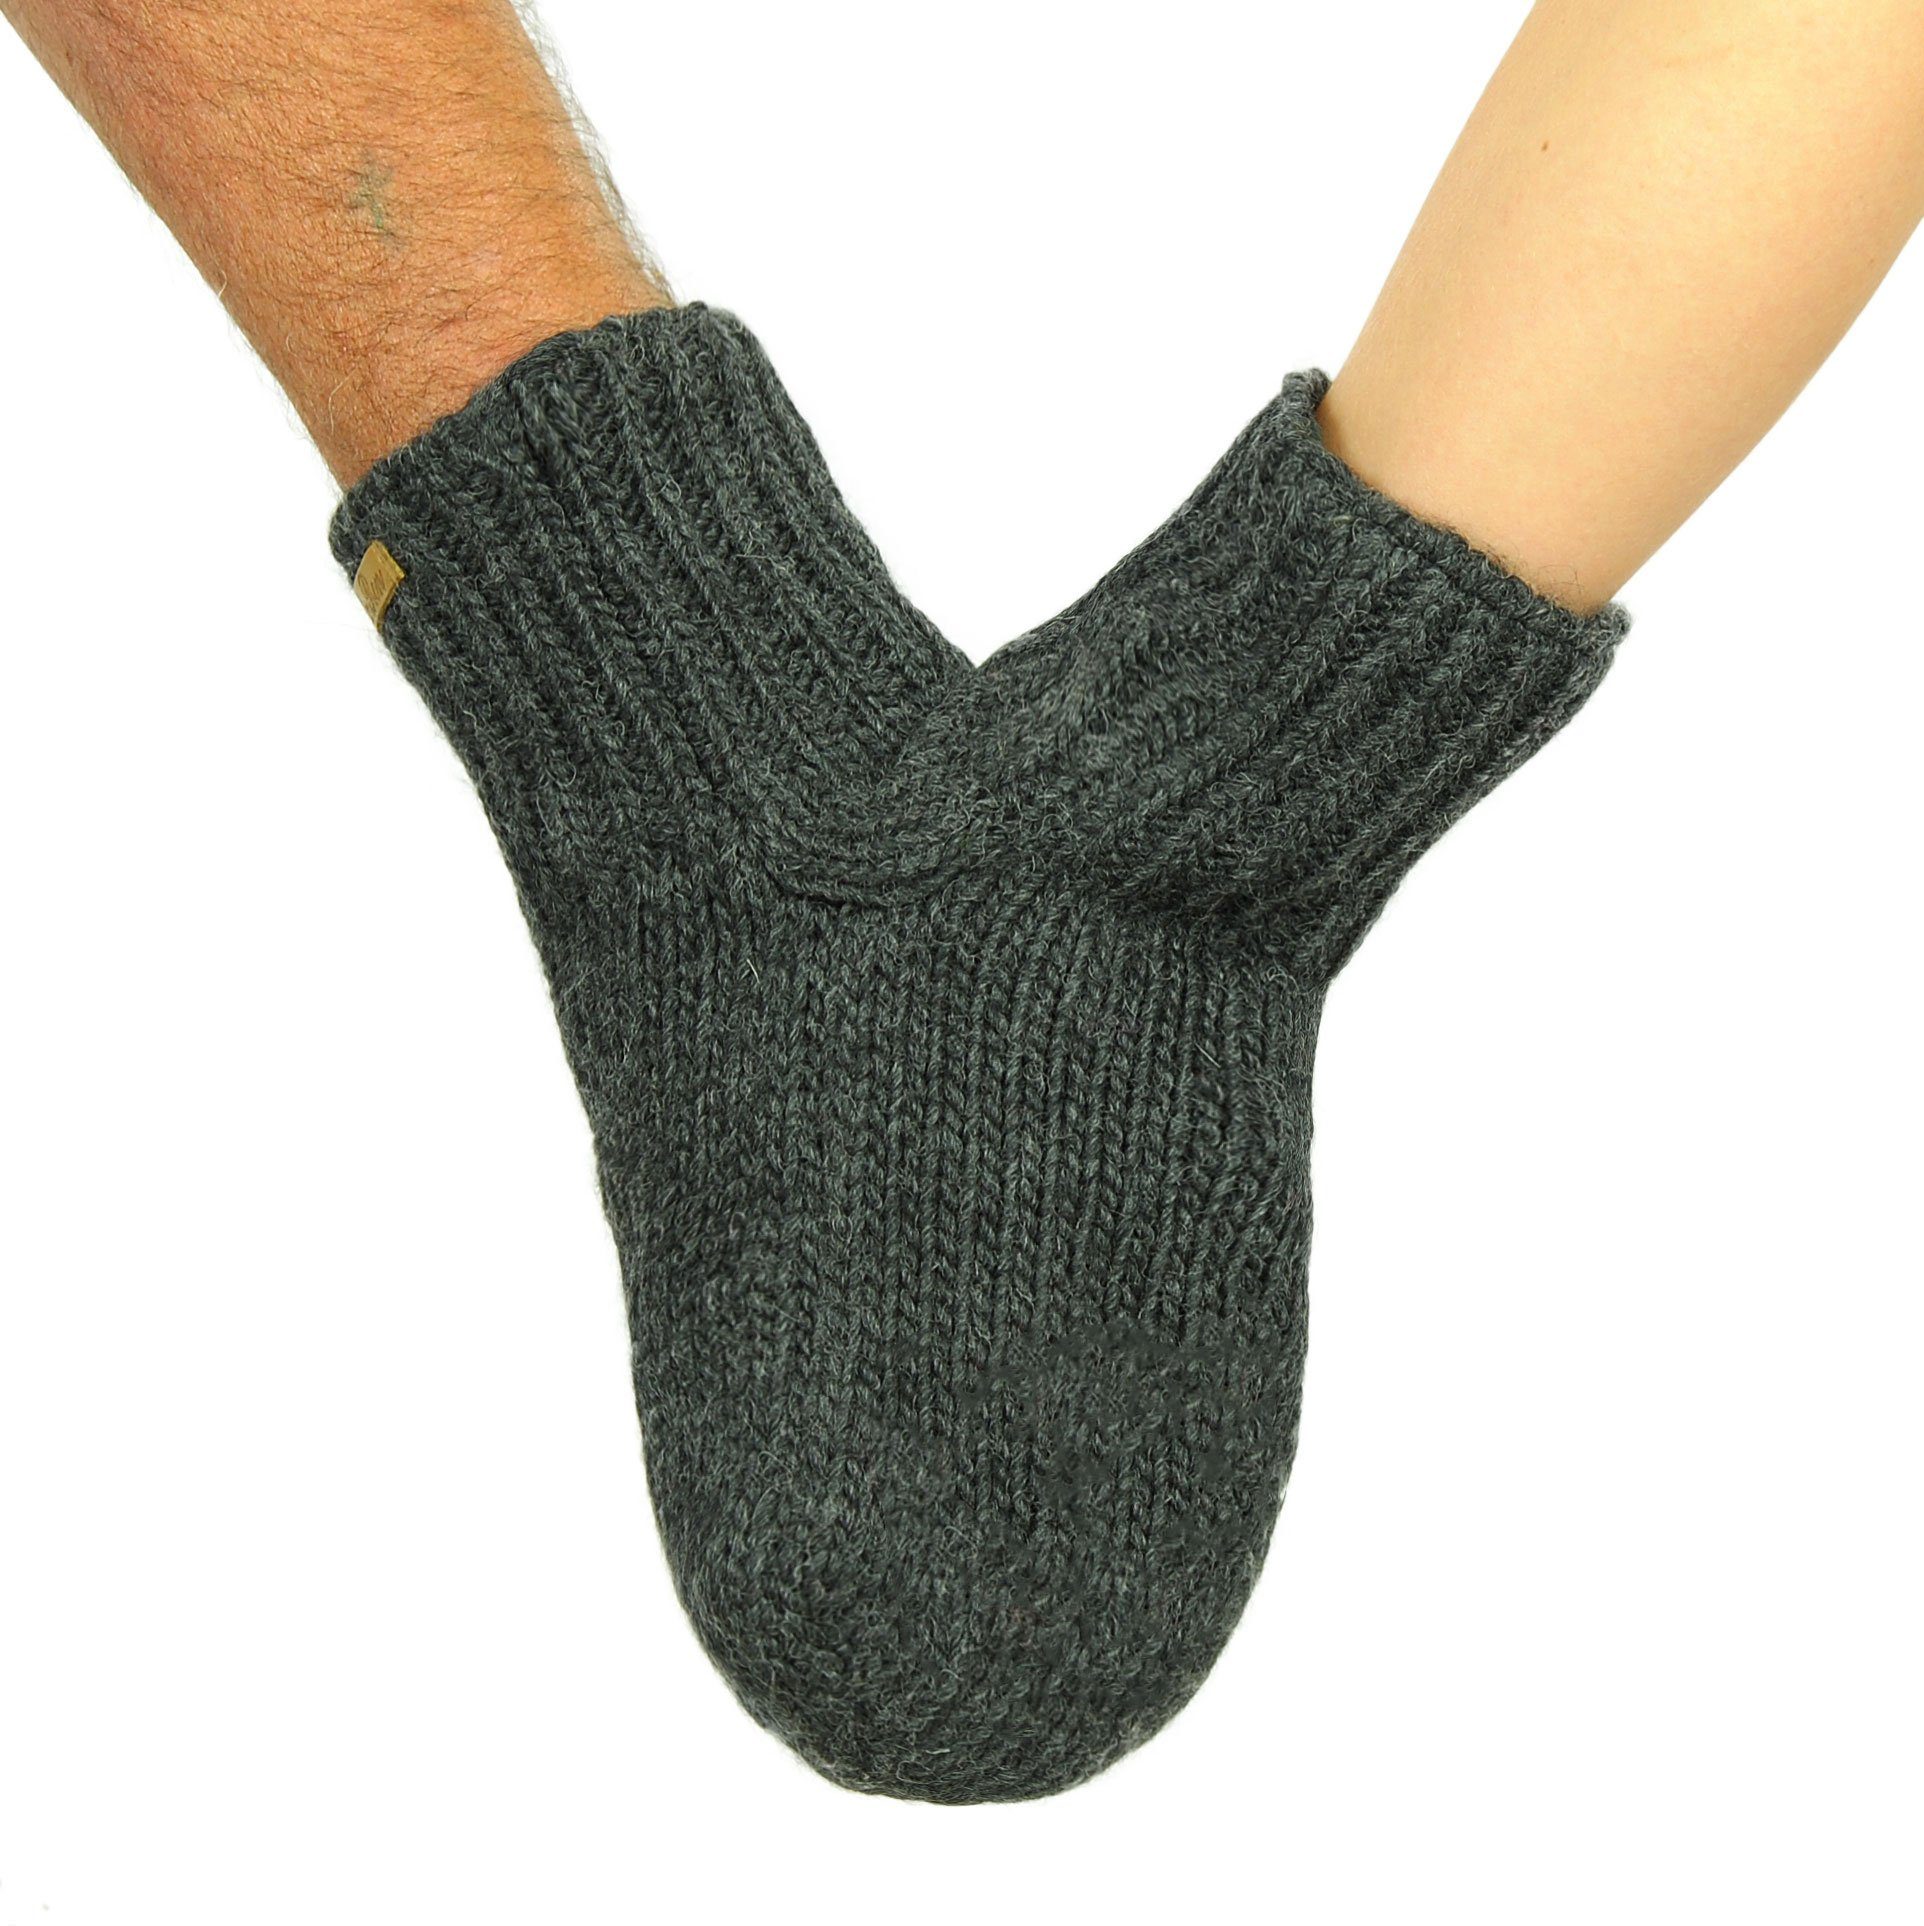 McRon Strickhandschuhe Pärchenhandschuh Modell Fleece zum Valentin gefüttert Handschuh komplett Naturhellgrau Ein mit Händchenhalten